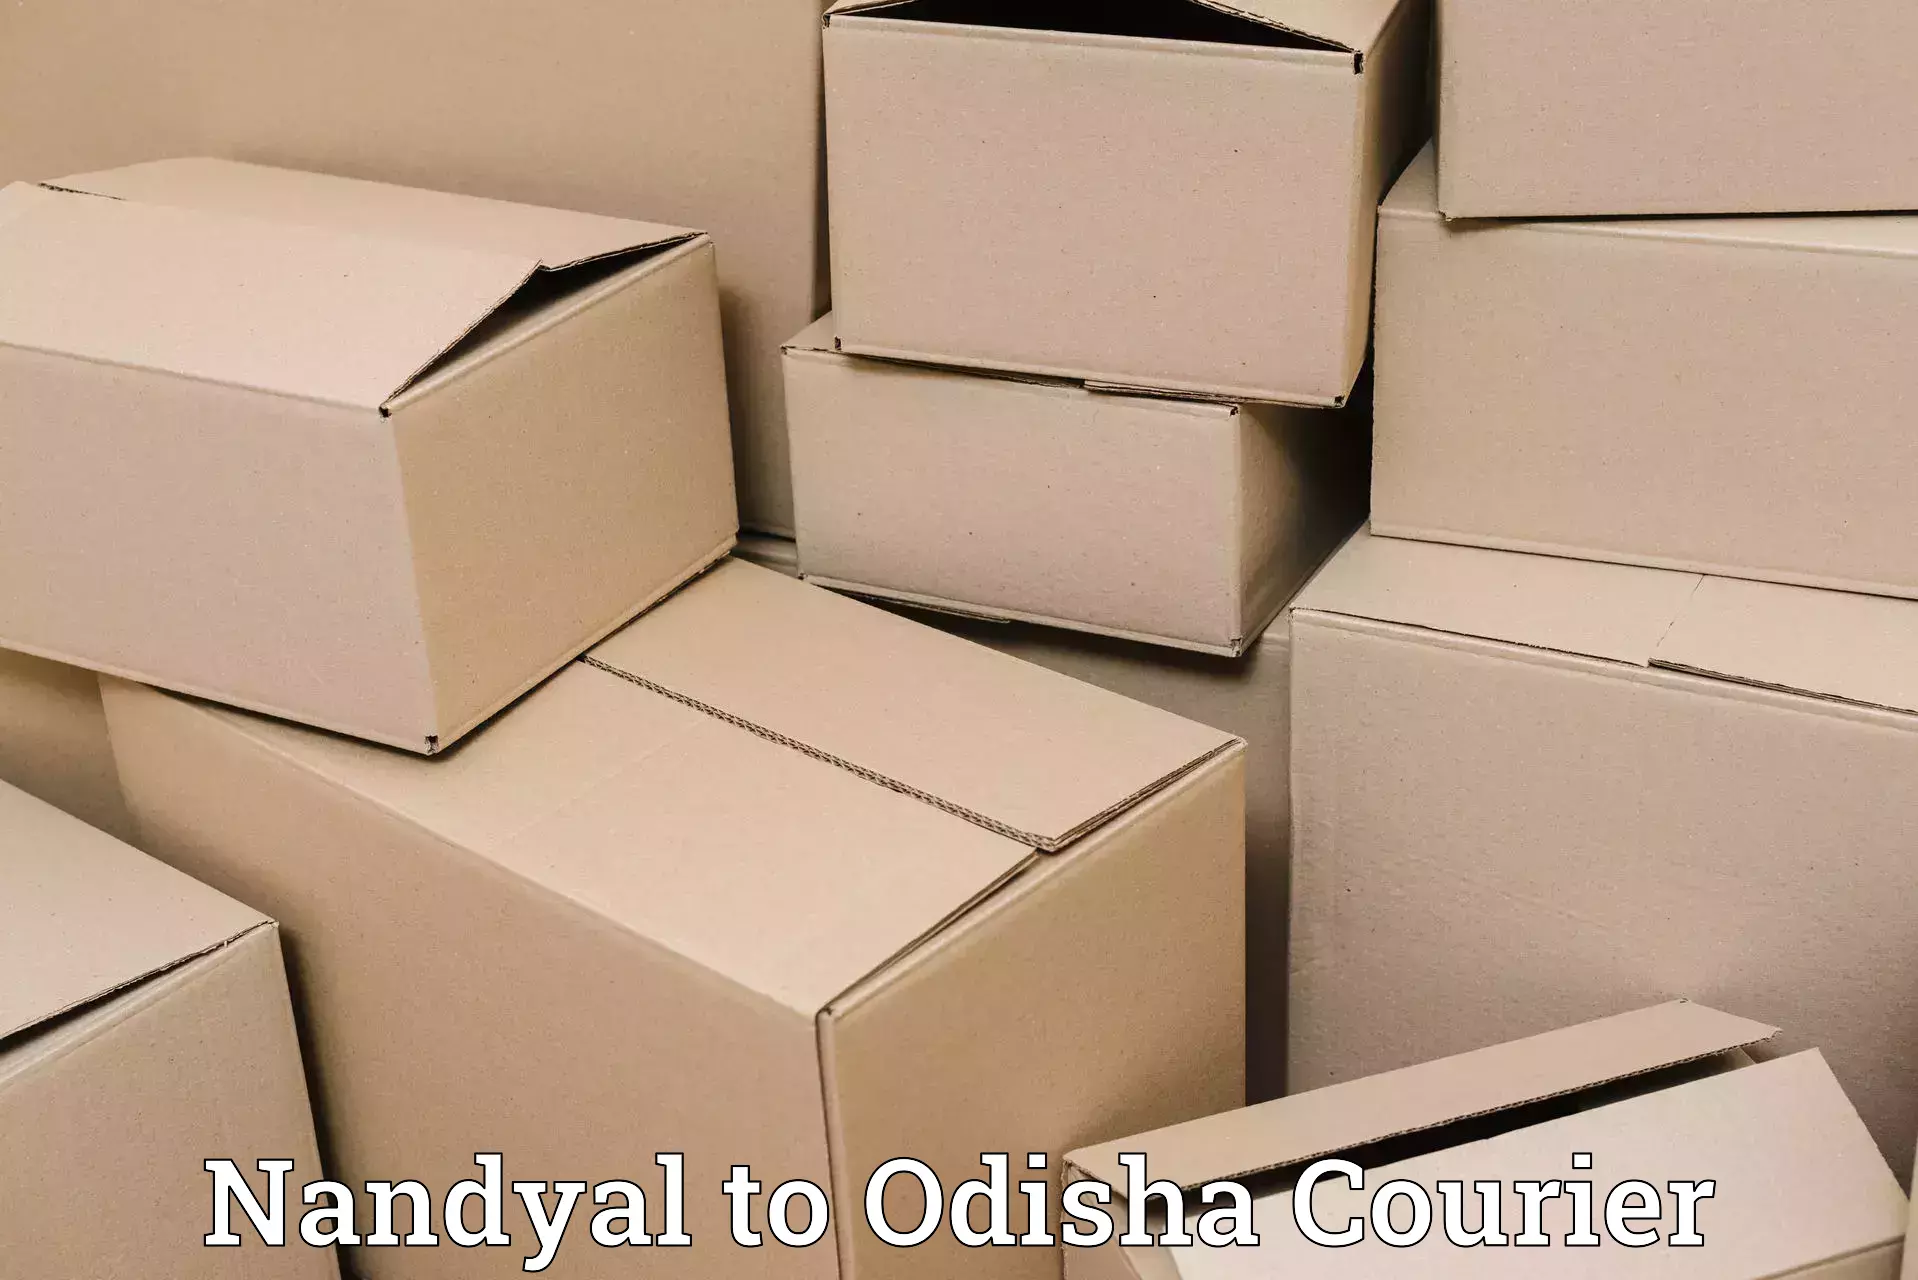 High-speed parcel service Nandyal to Nirakarpur